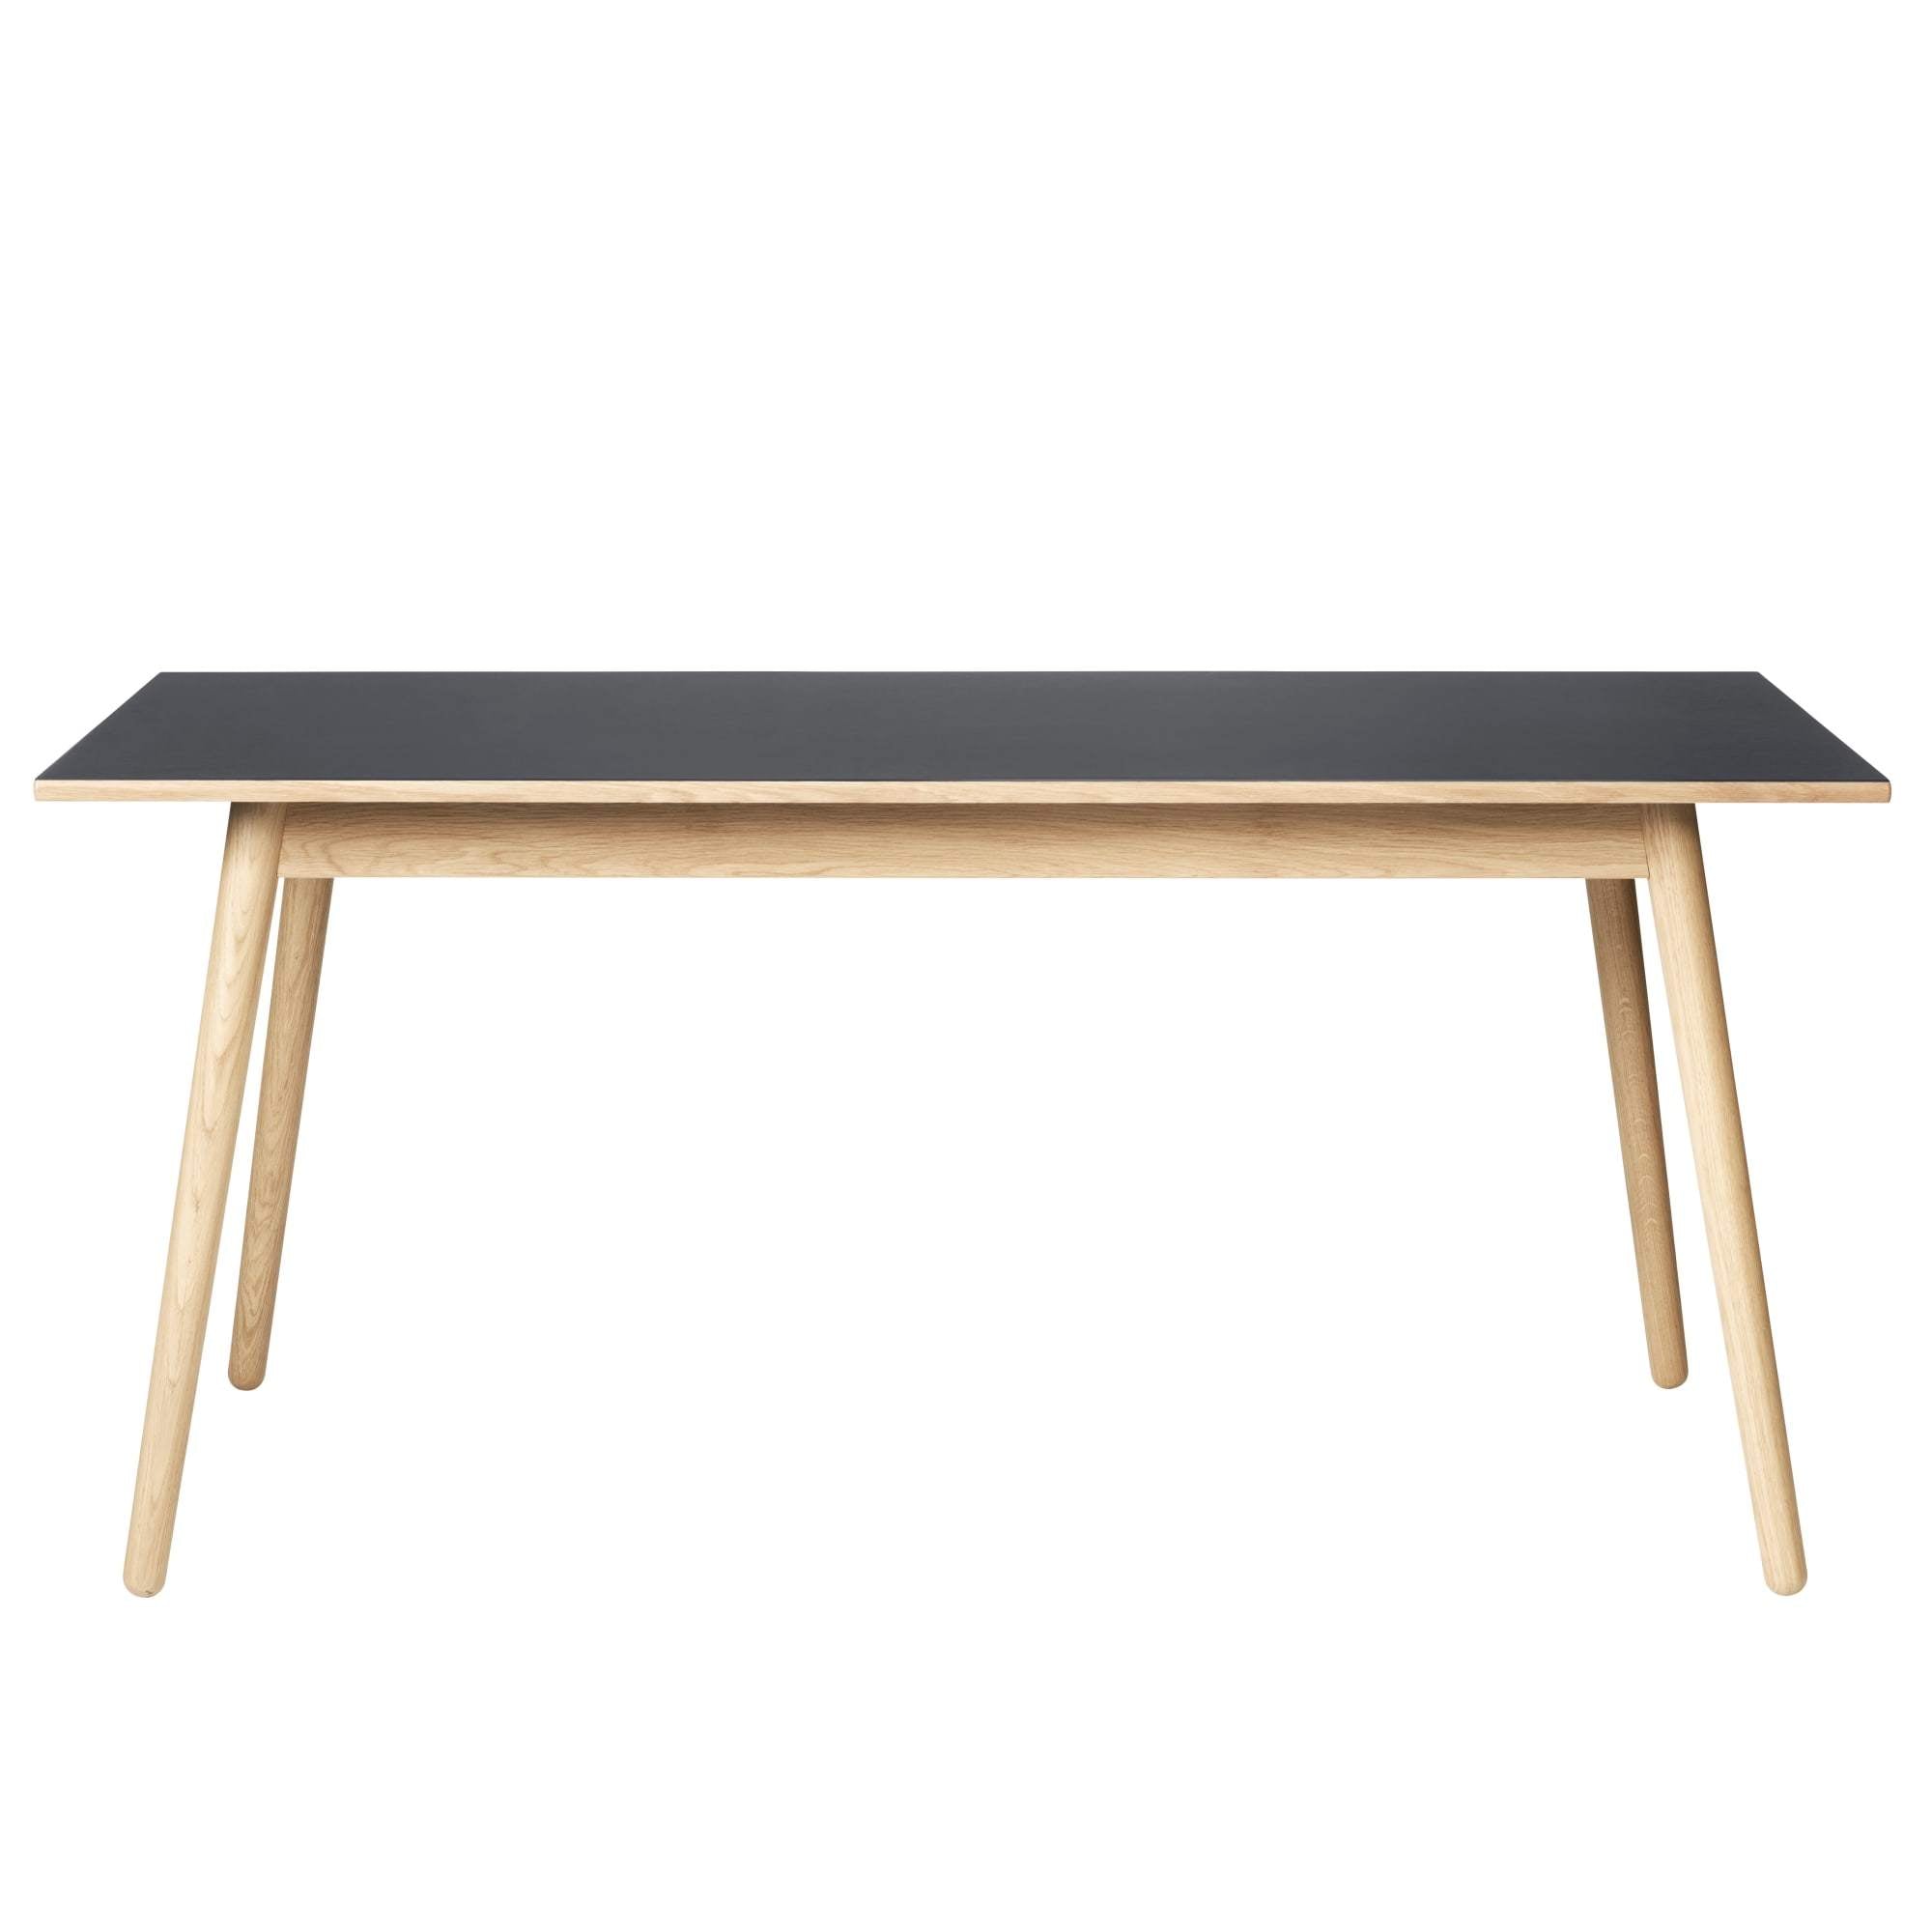 FDB Møbler C35 B Spisebordets eg, mørkegrå linoleum, 160 cm